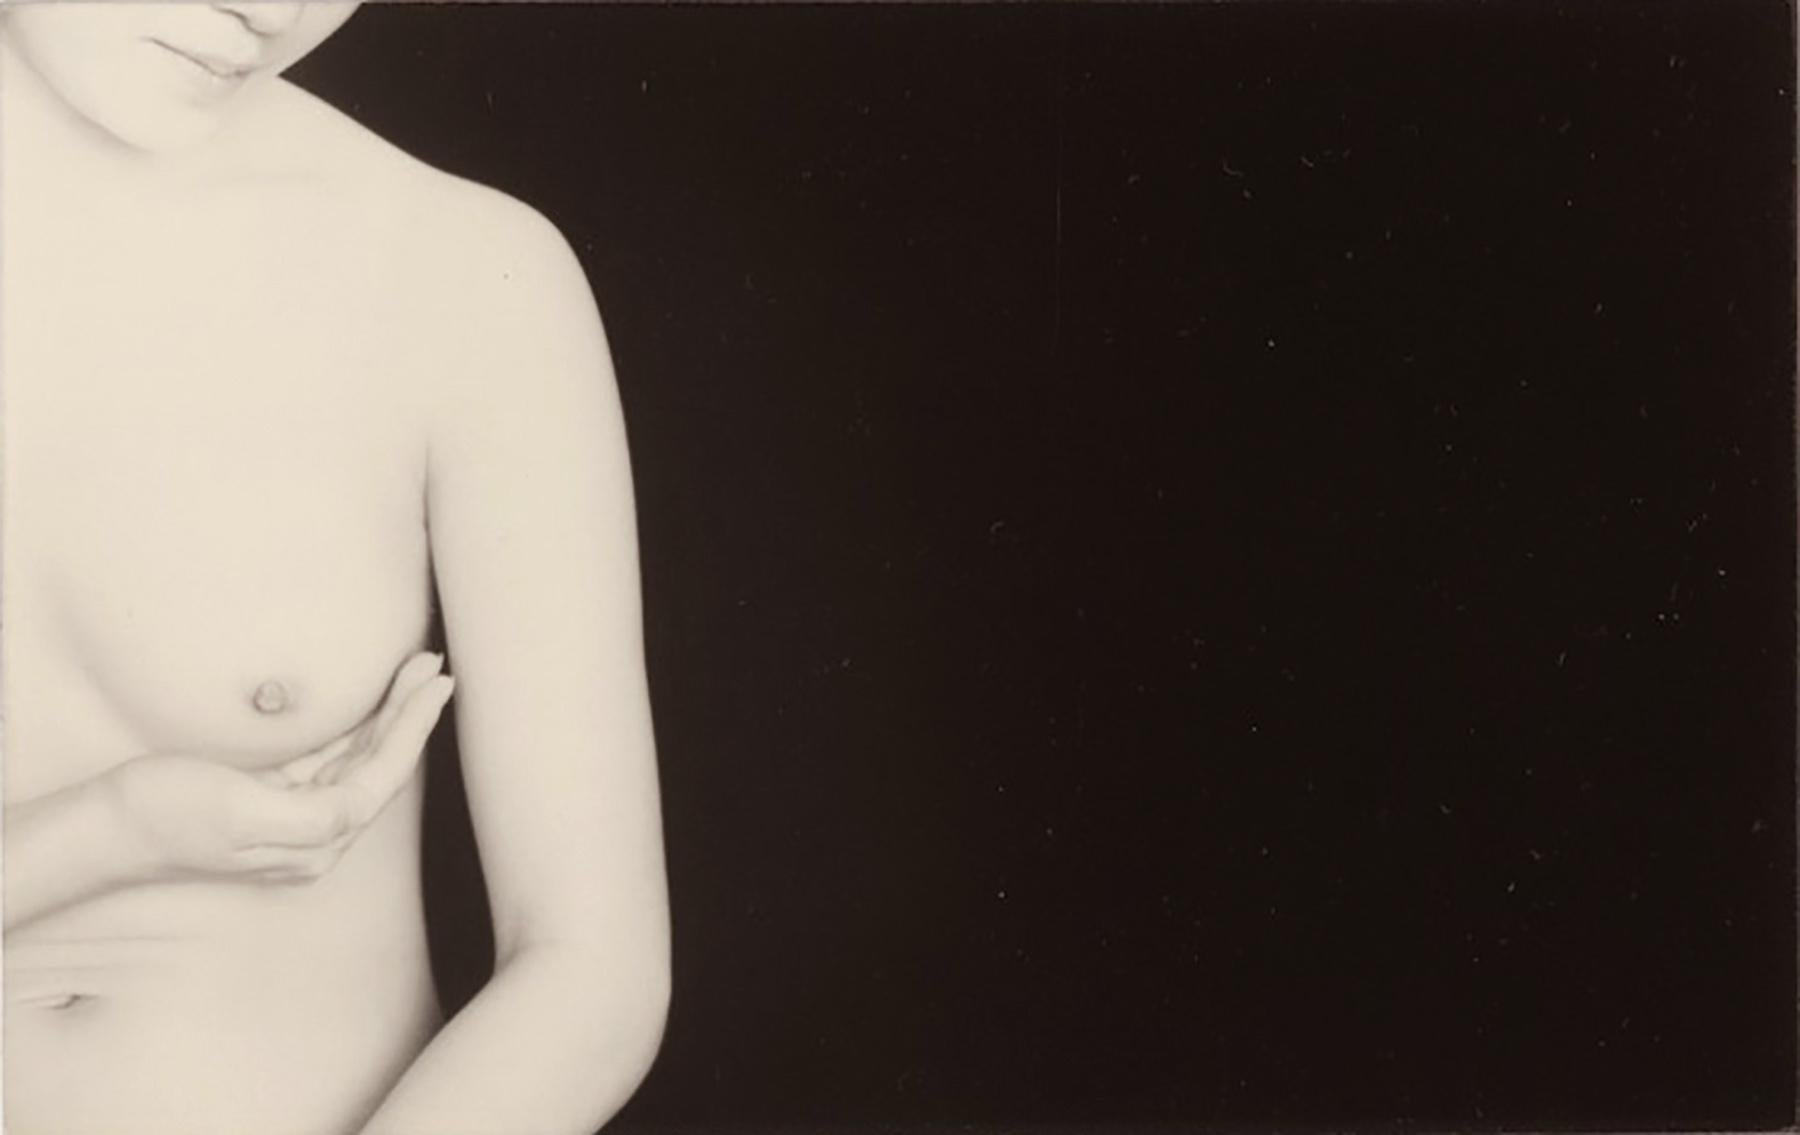 Masao Yamamoto Nude Photograph - Yamamoto Masao, #1140 from Nakazora, 2002, gelatin silver print.